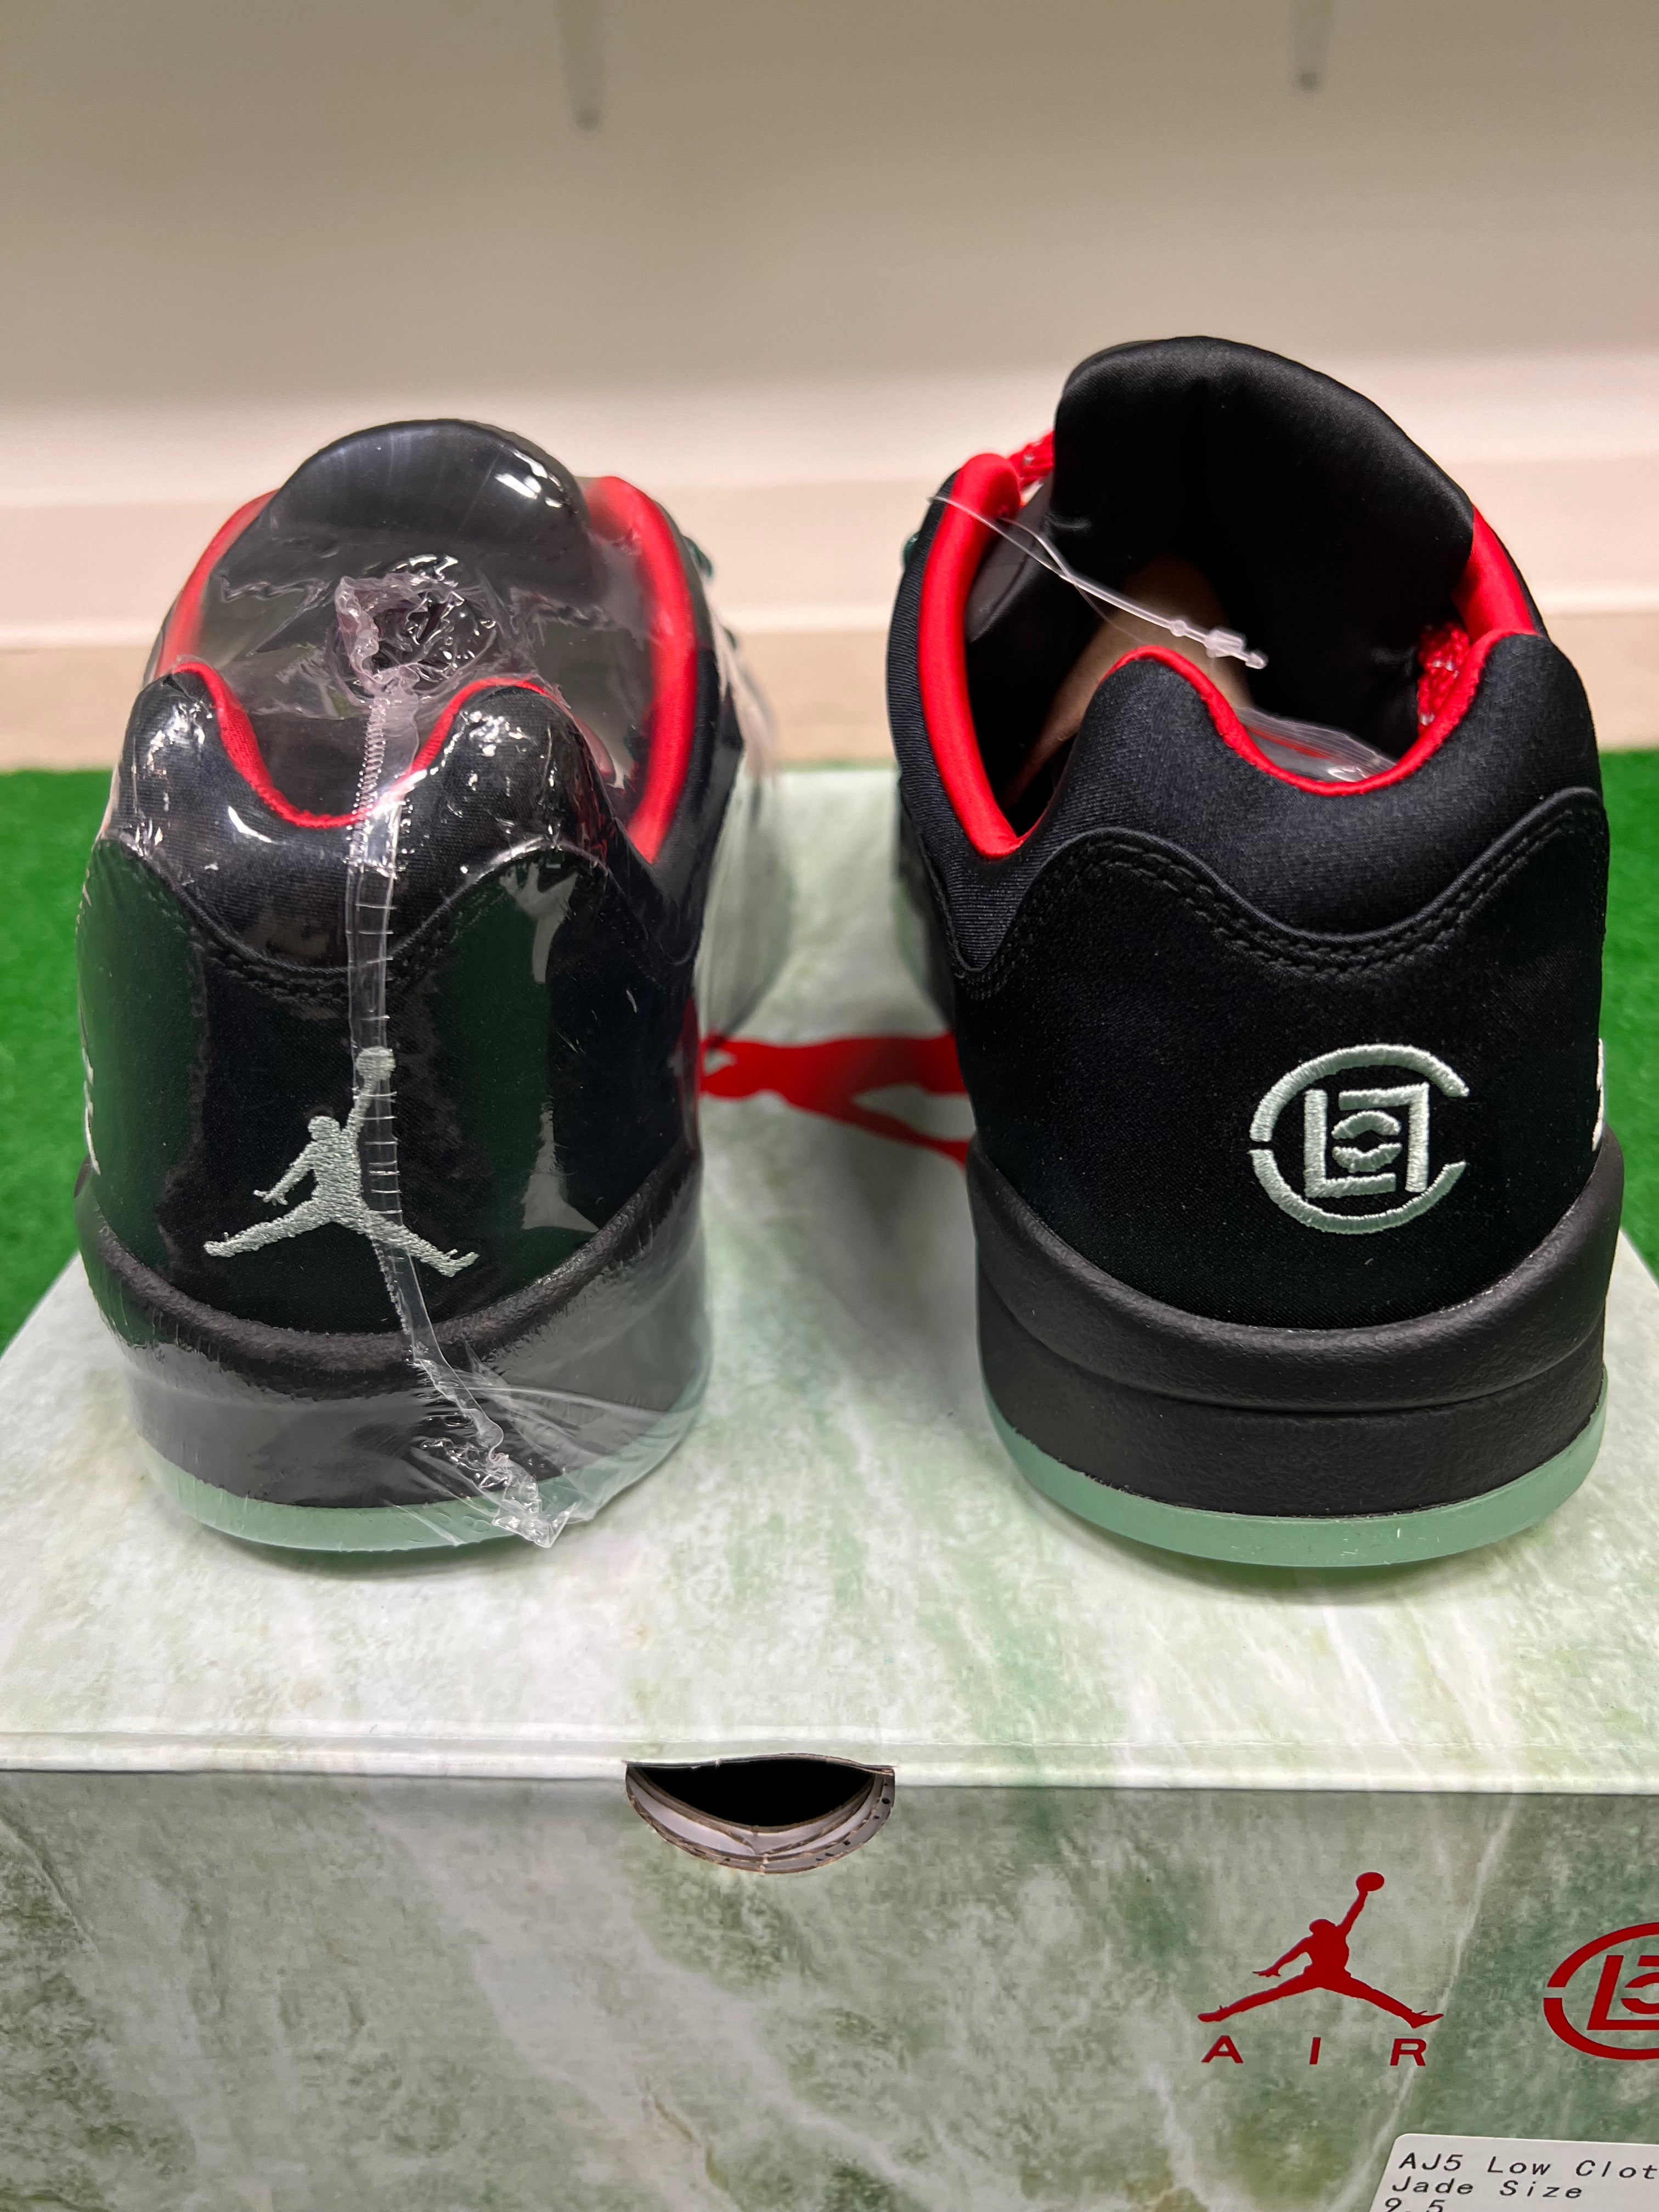 Air Jordan 5 low retro clot multiple sizes men’s shoe new